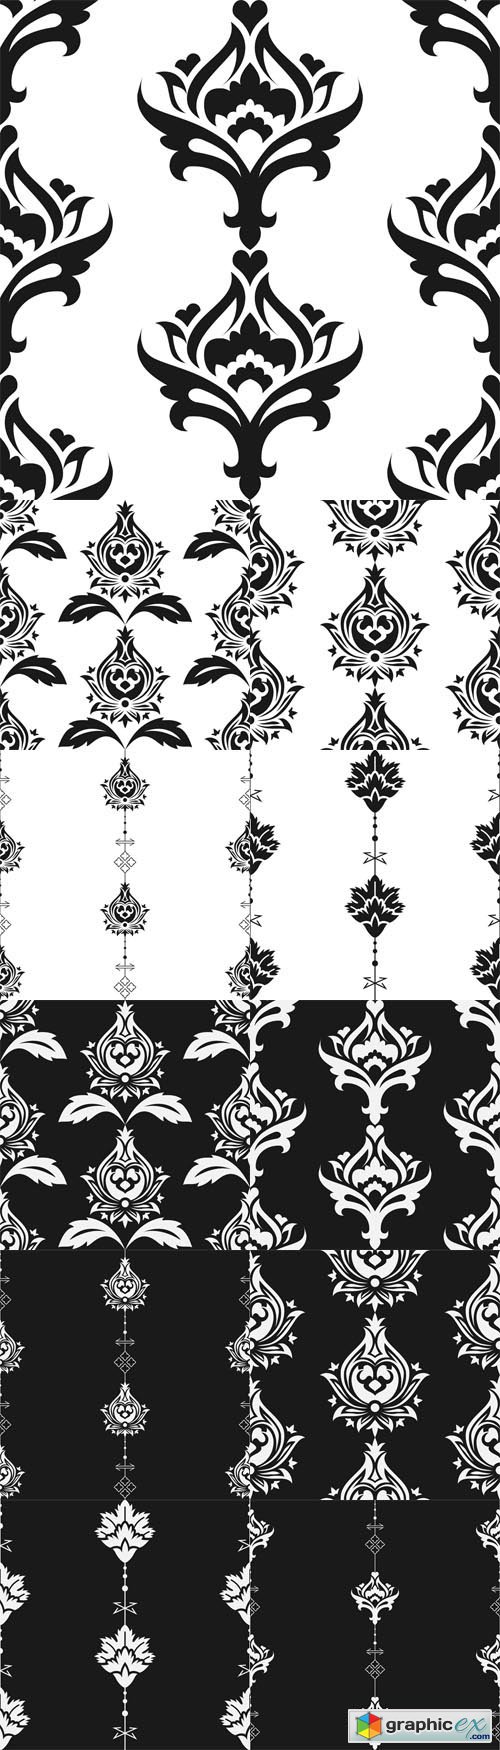 Seamless eastern style pattern. Arabic ornament